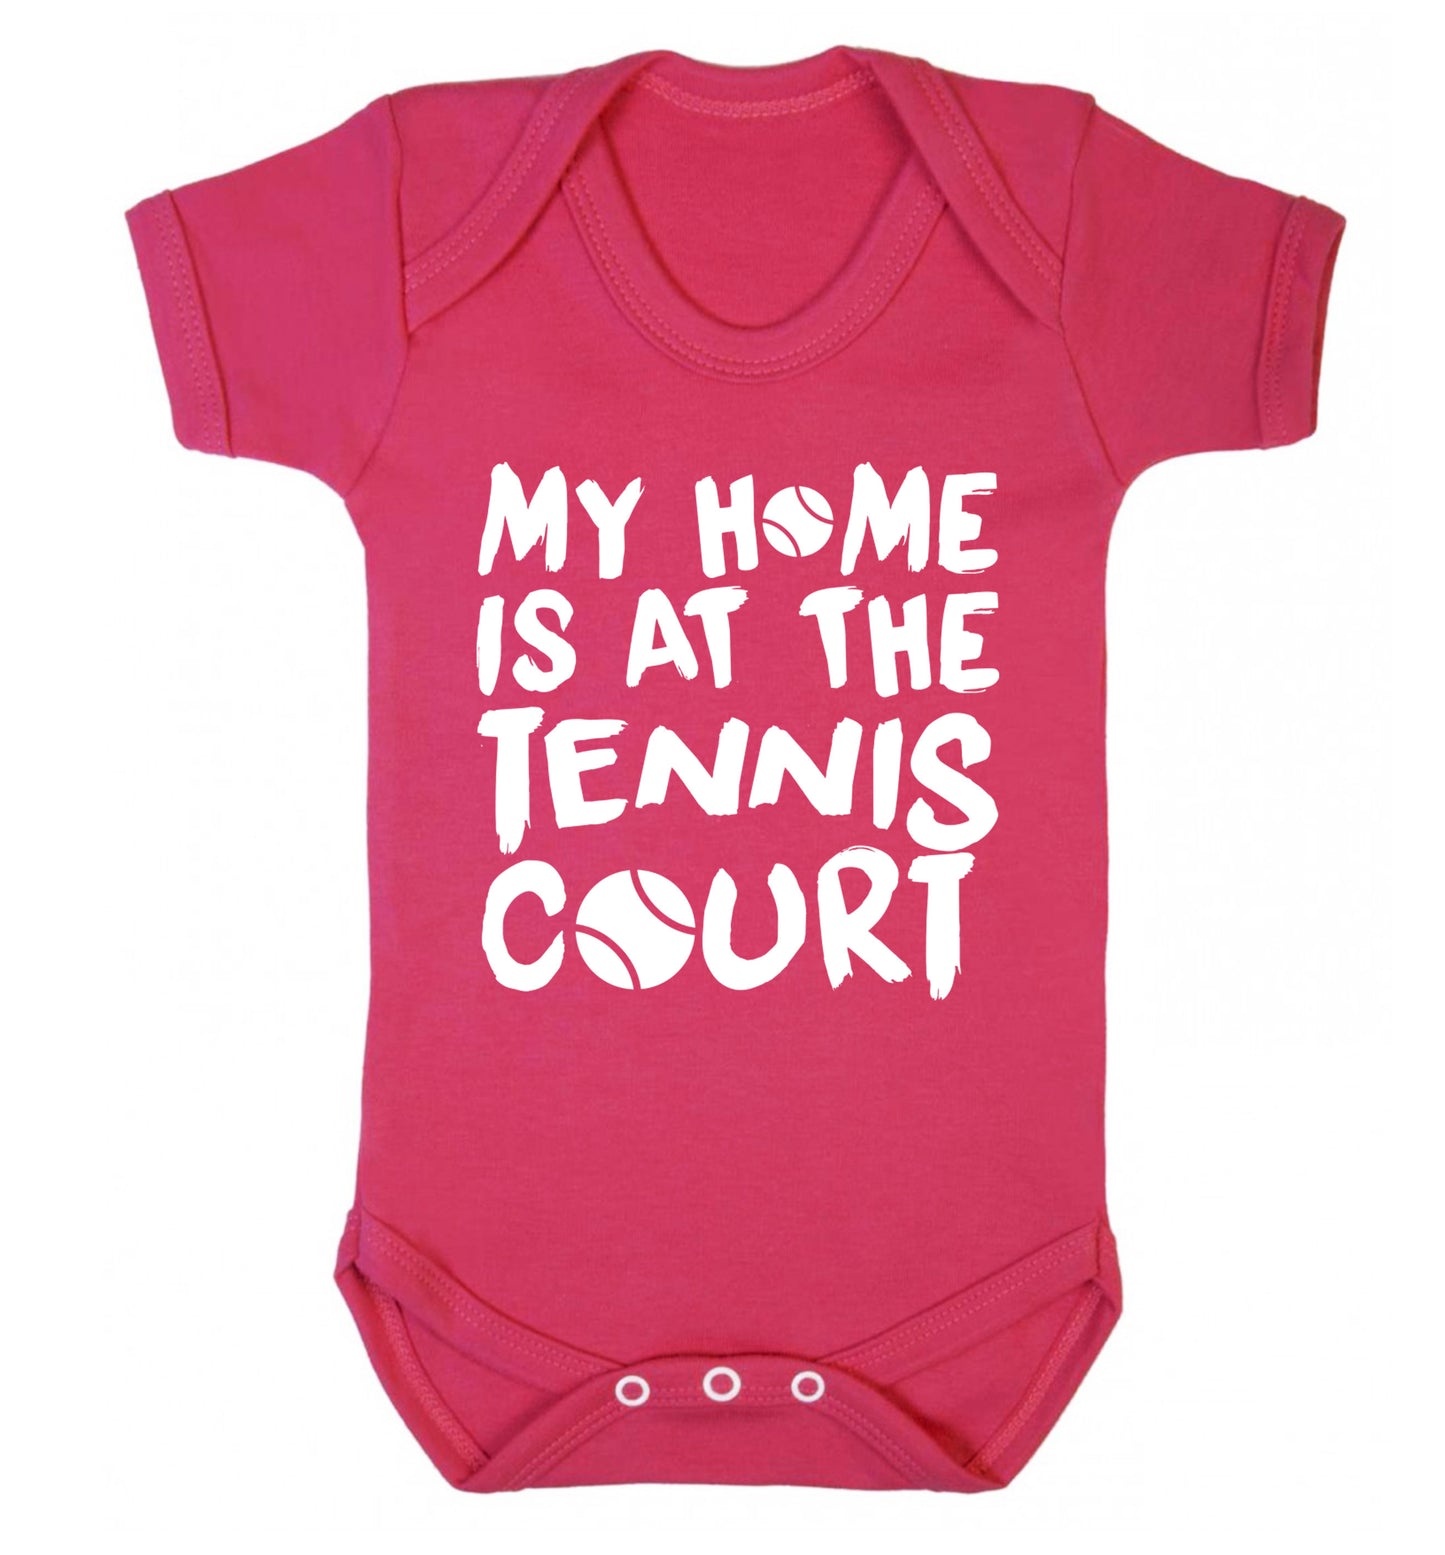 My home is at the tennis court Baby Vest dark pink 18-24 months